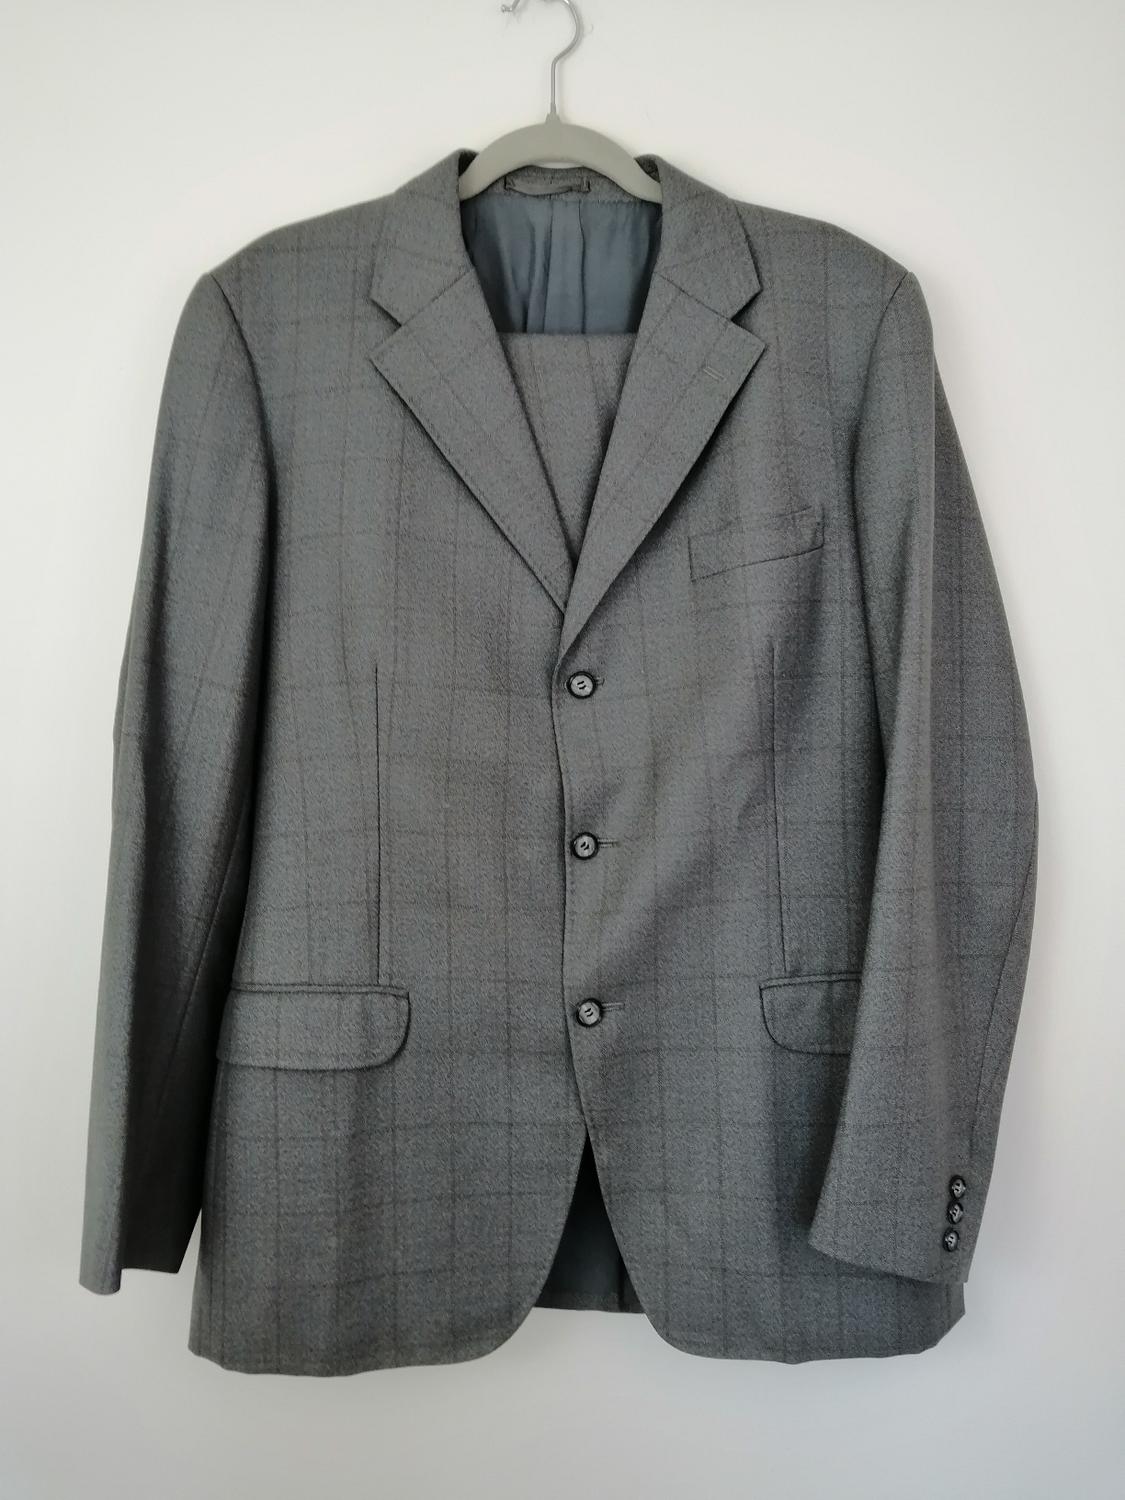 Vintage ljusgrå kostym diskret rutig ljusblå rand byxor slät front 6070-tal